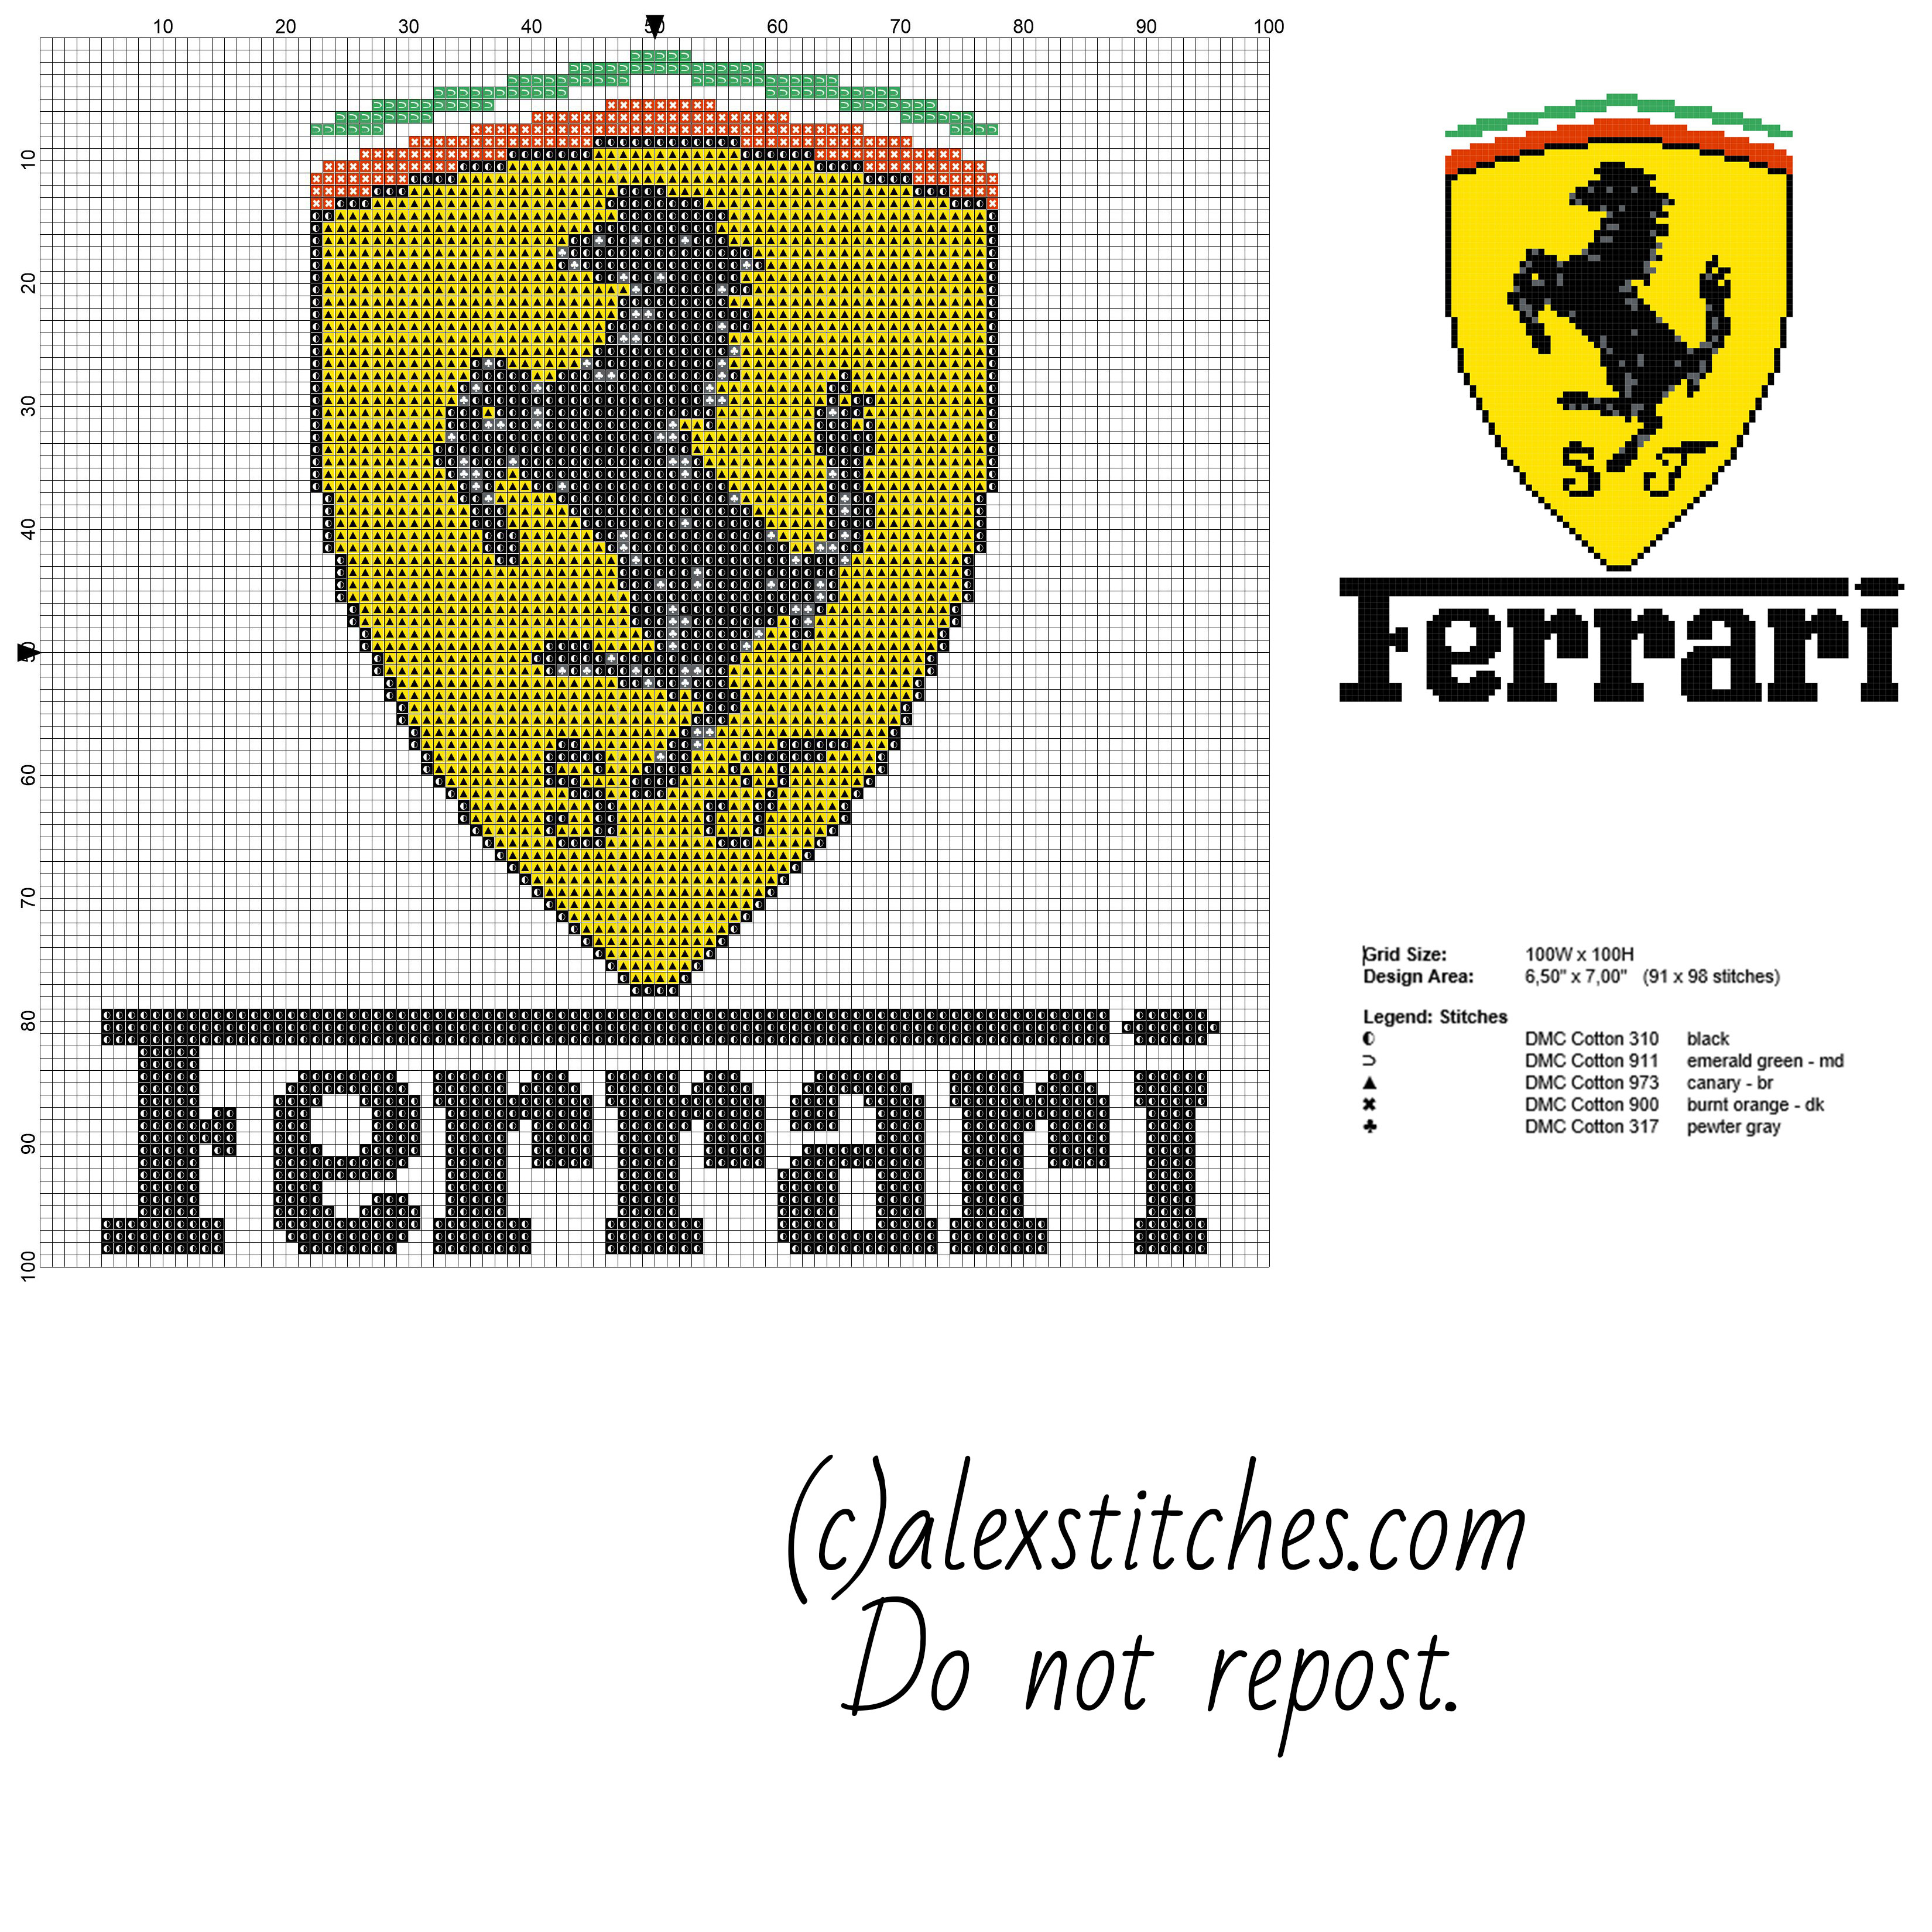 Ferrari car logo free cross stitch pattern made with pcstitch